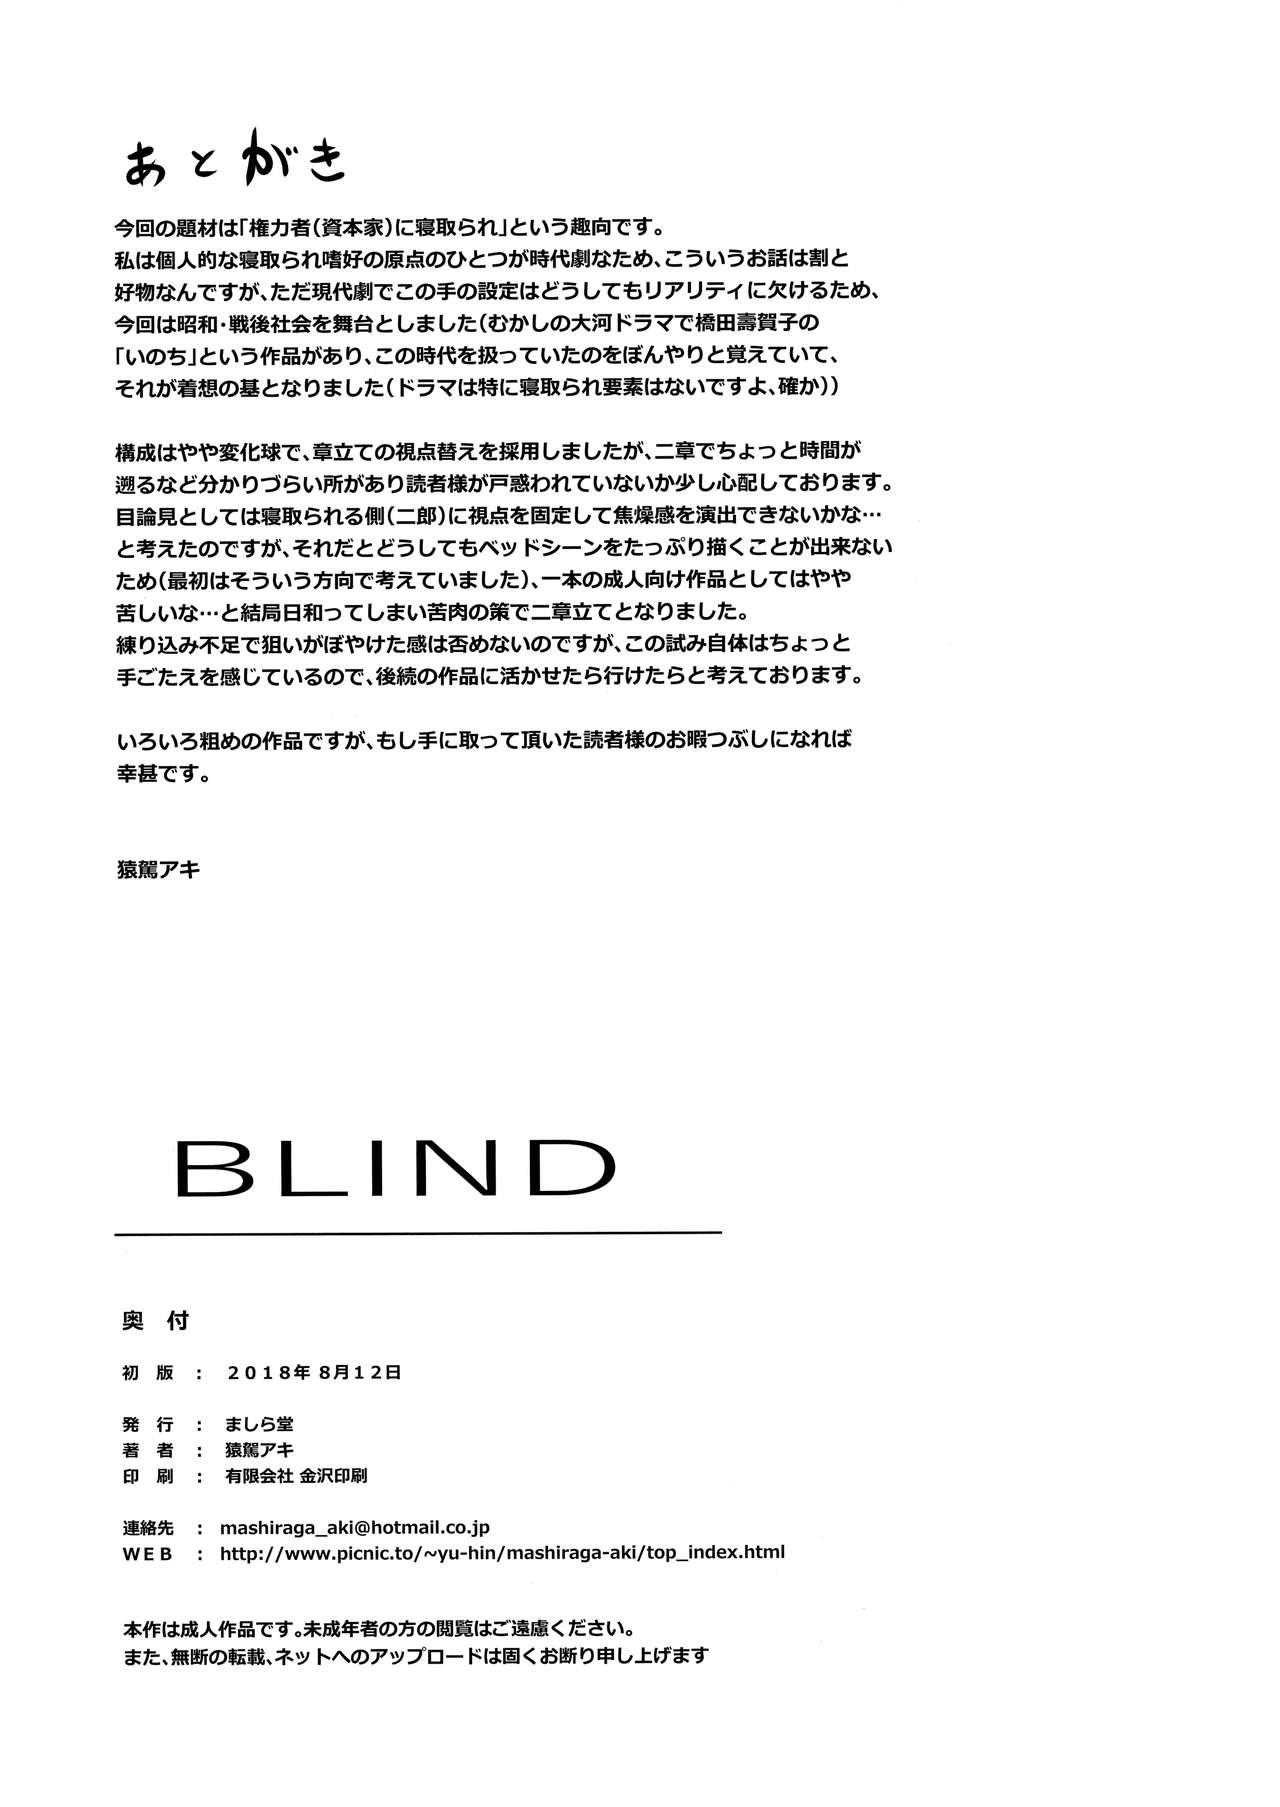 Blind 40